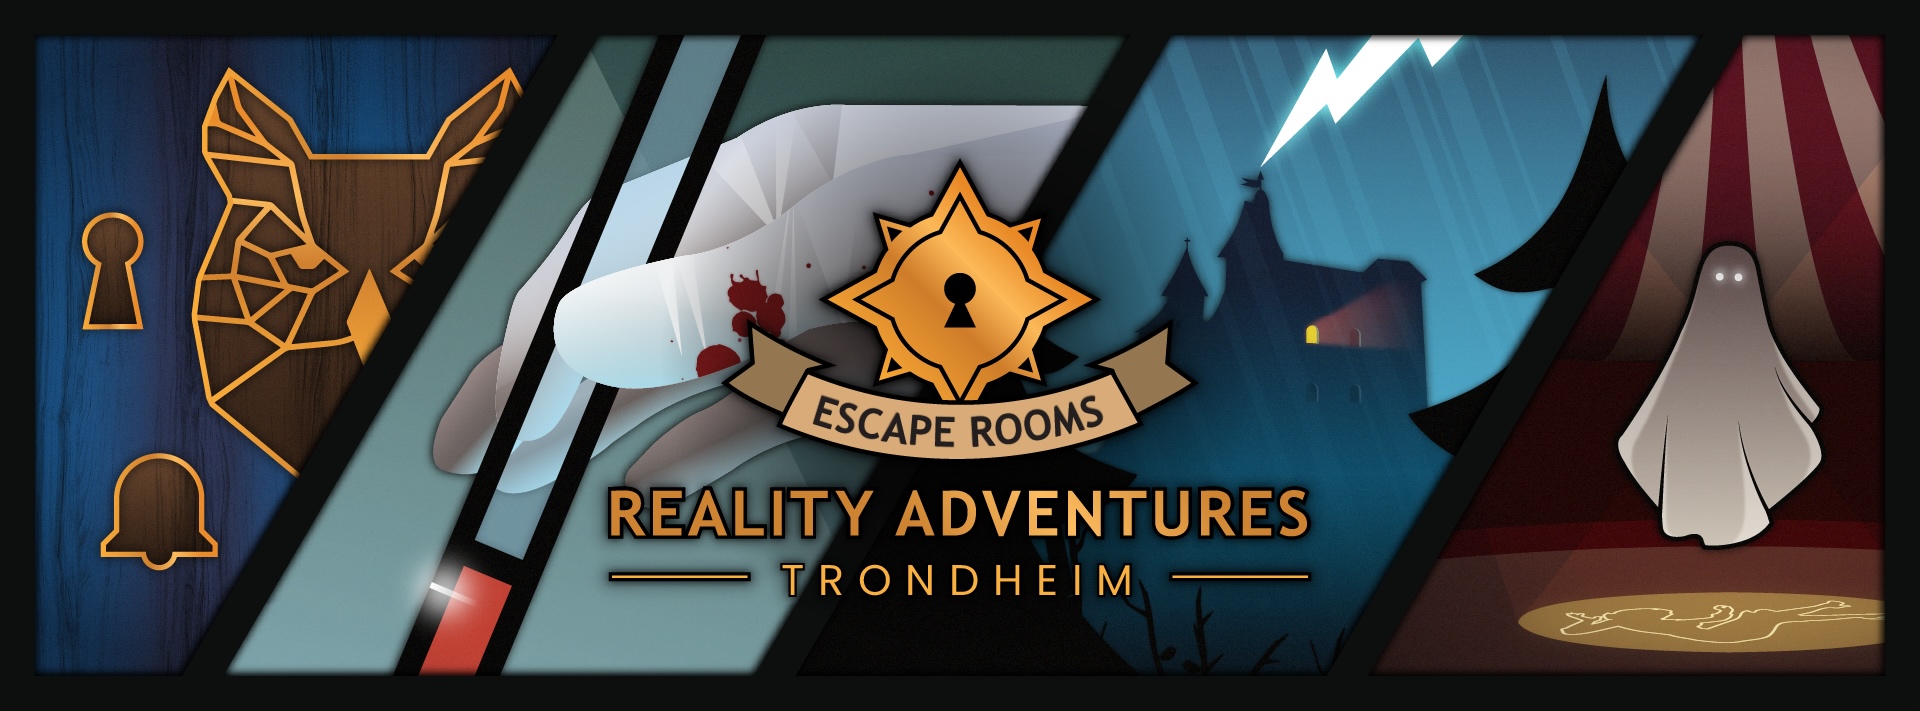 Escape Rooms - Reality Adventures Trondheim